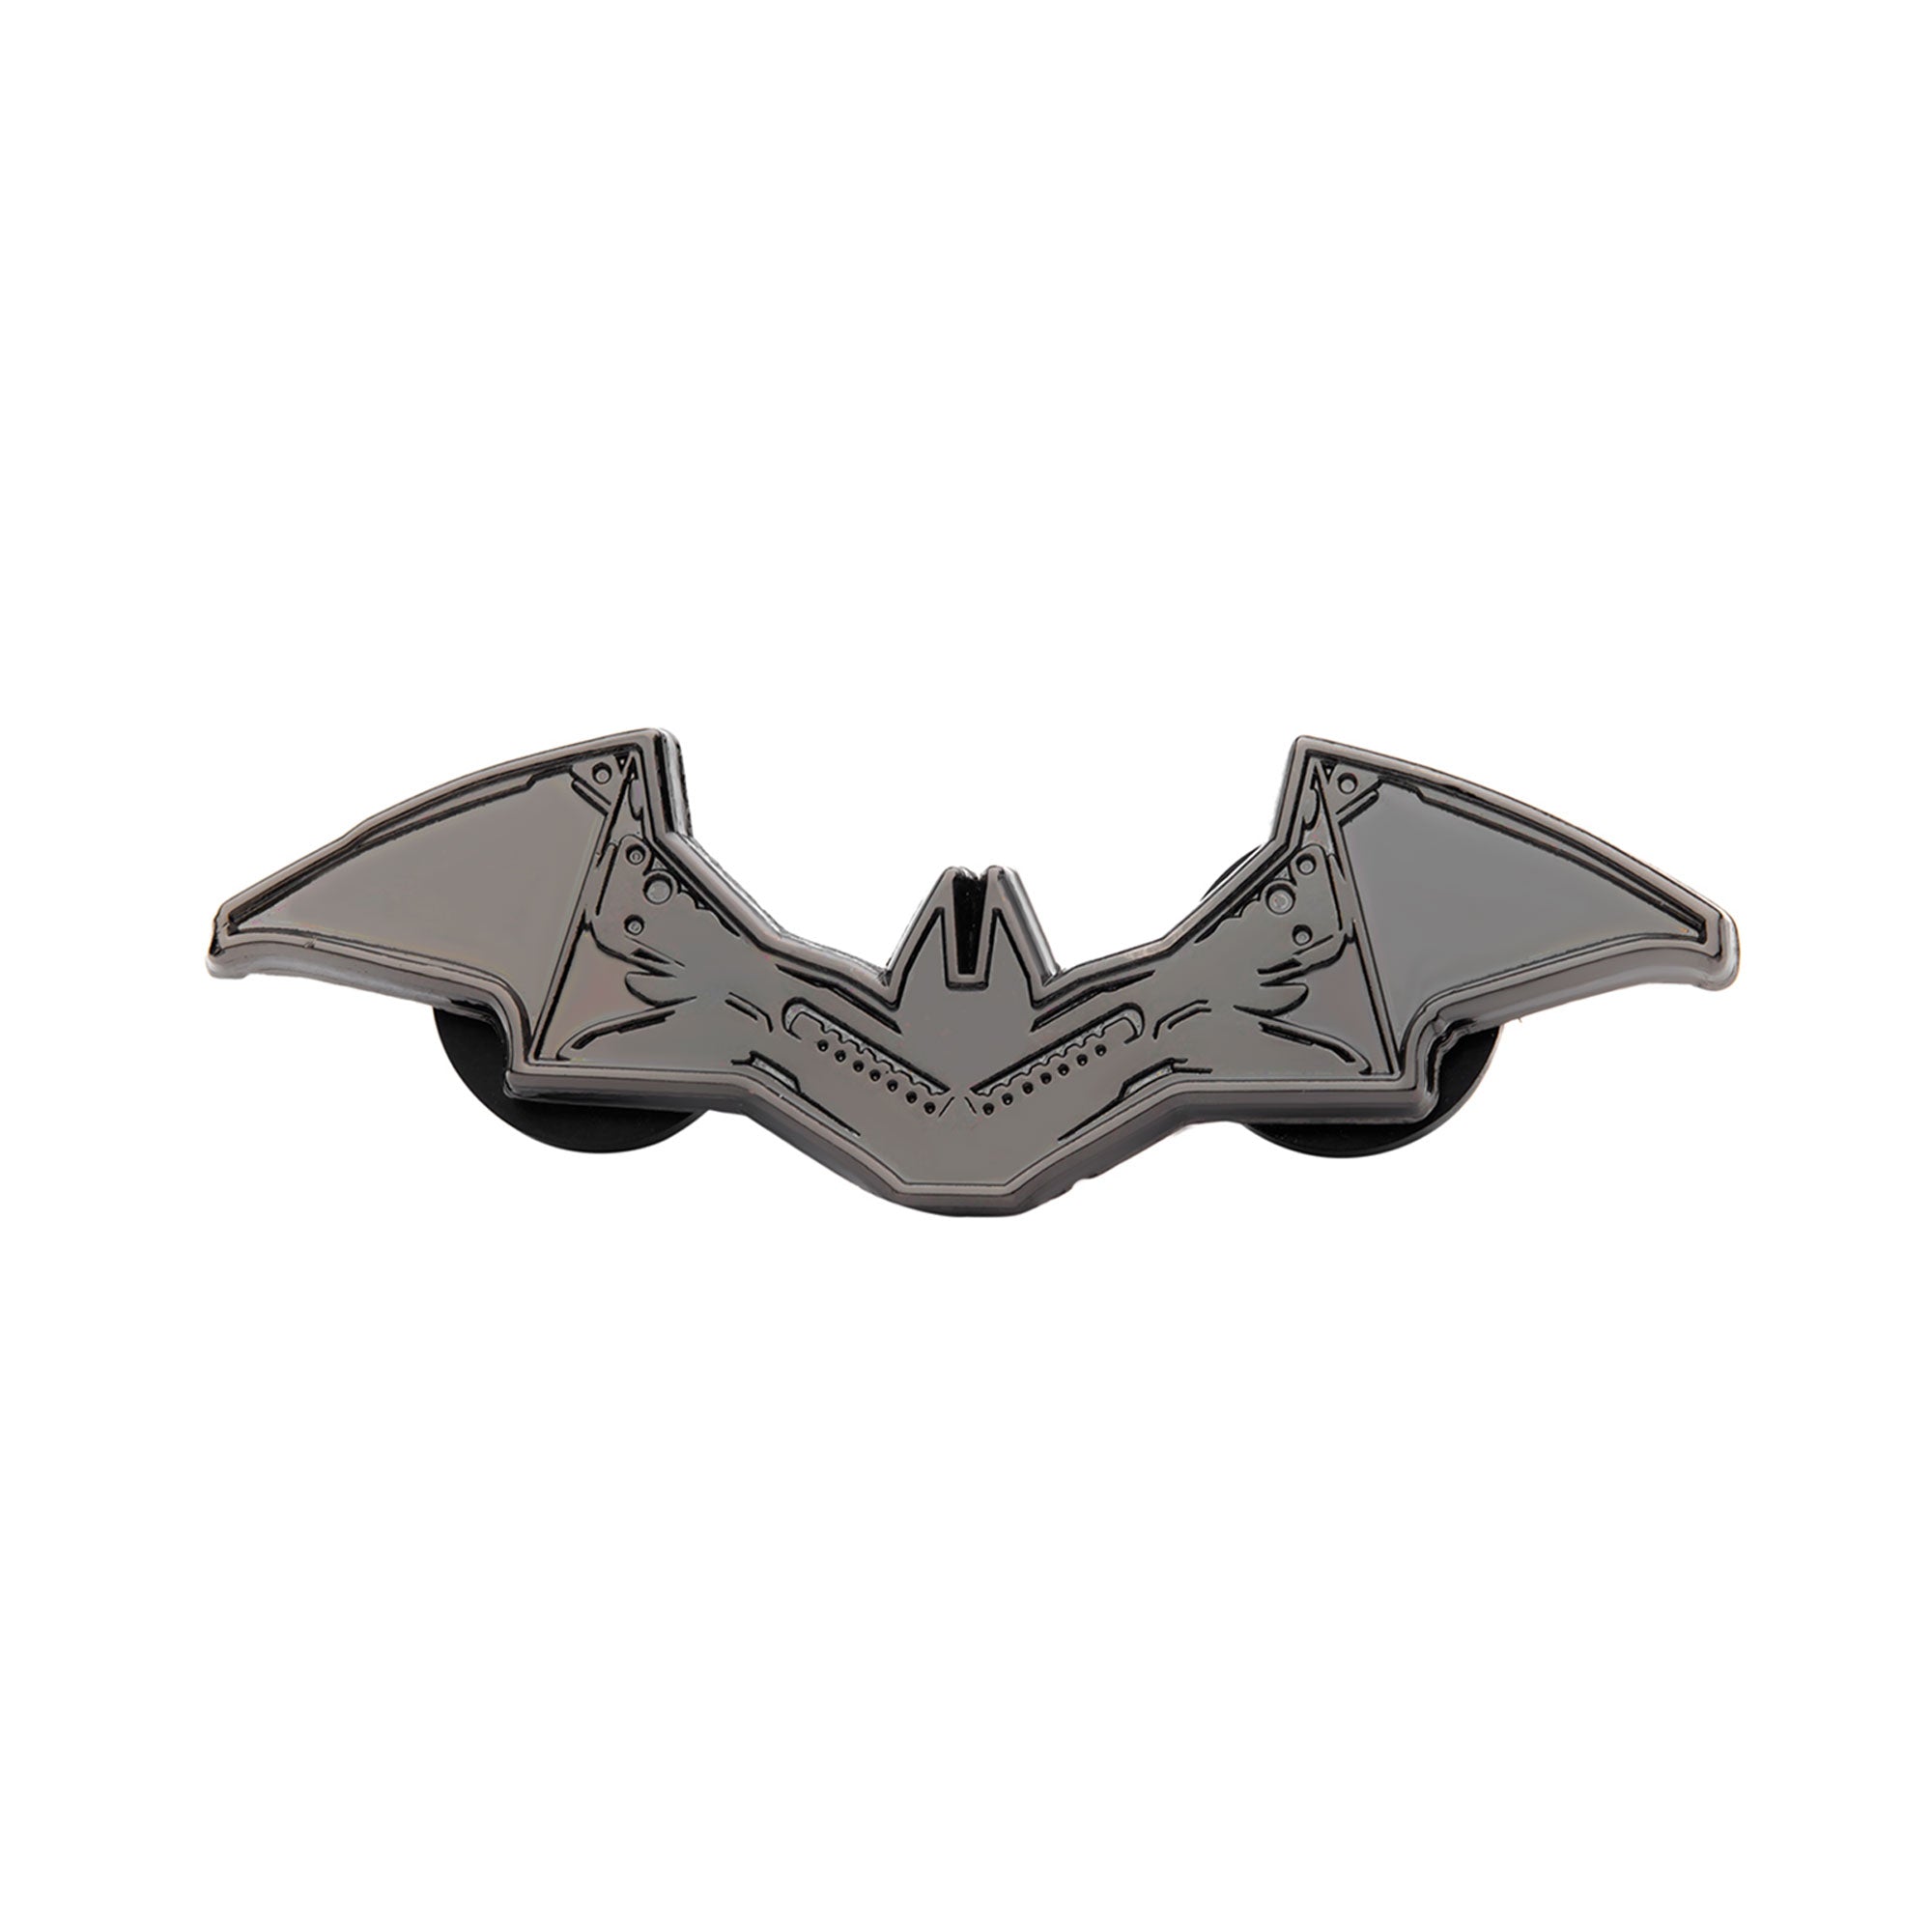 DC Comics Warner Brothers The Batman Batarang Pin